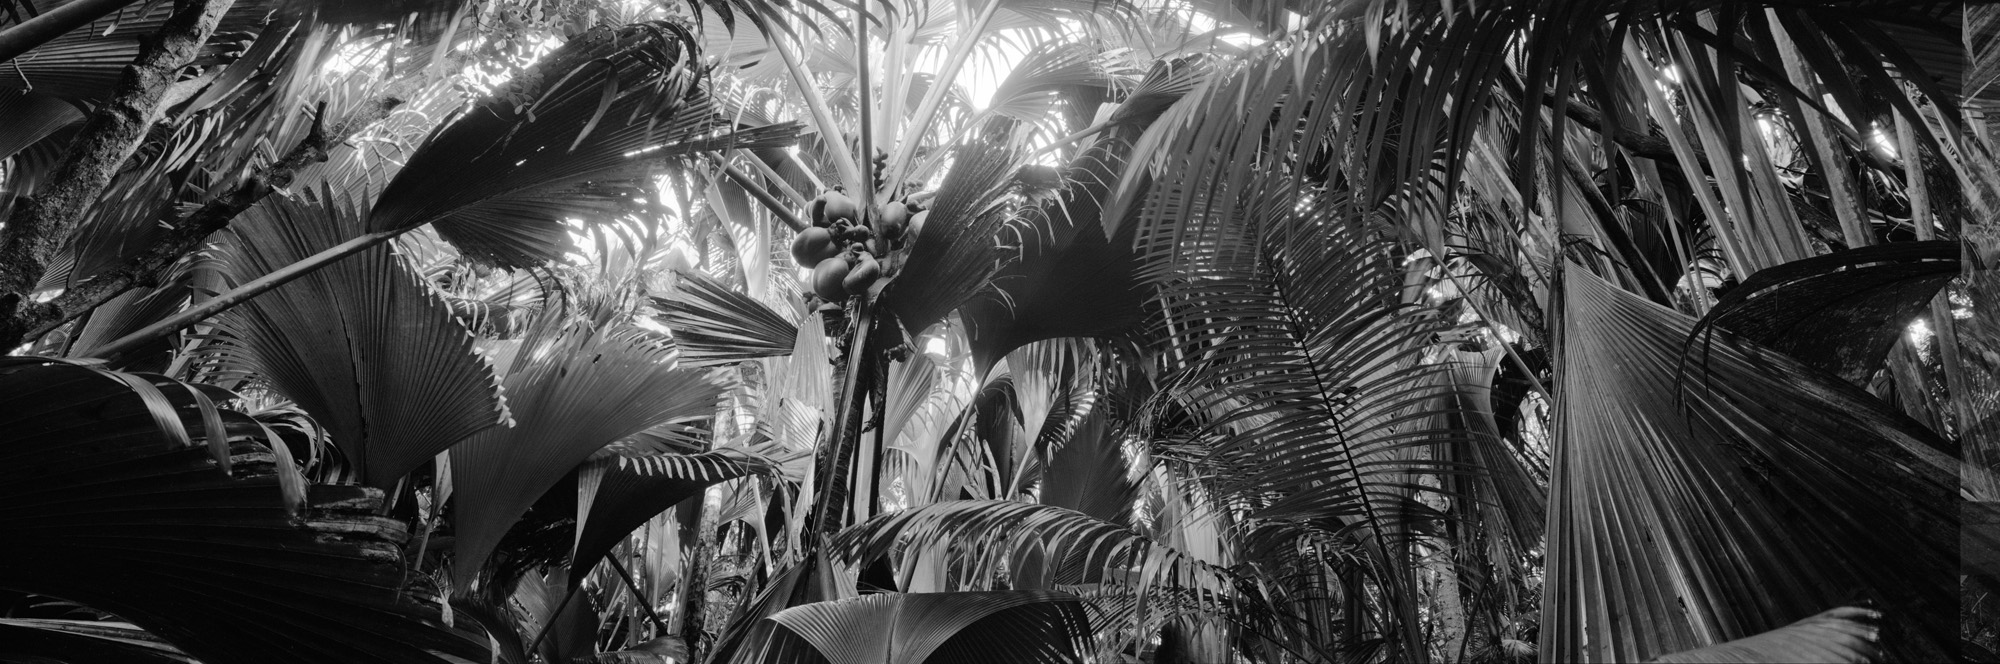 大幅面攝影, 大幅面攝影, 大幅面攝影, 攝影, 攝影, 攝影, 6x17, 黑與白, 黑與白, bw, bw, 美術, 藝術, 棕櫚樹, 棕櫚樹, 蕨類植物, 蕨類植物,